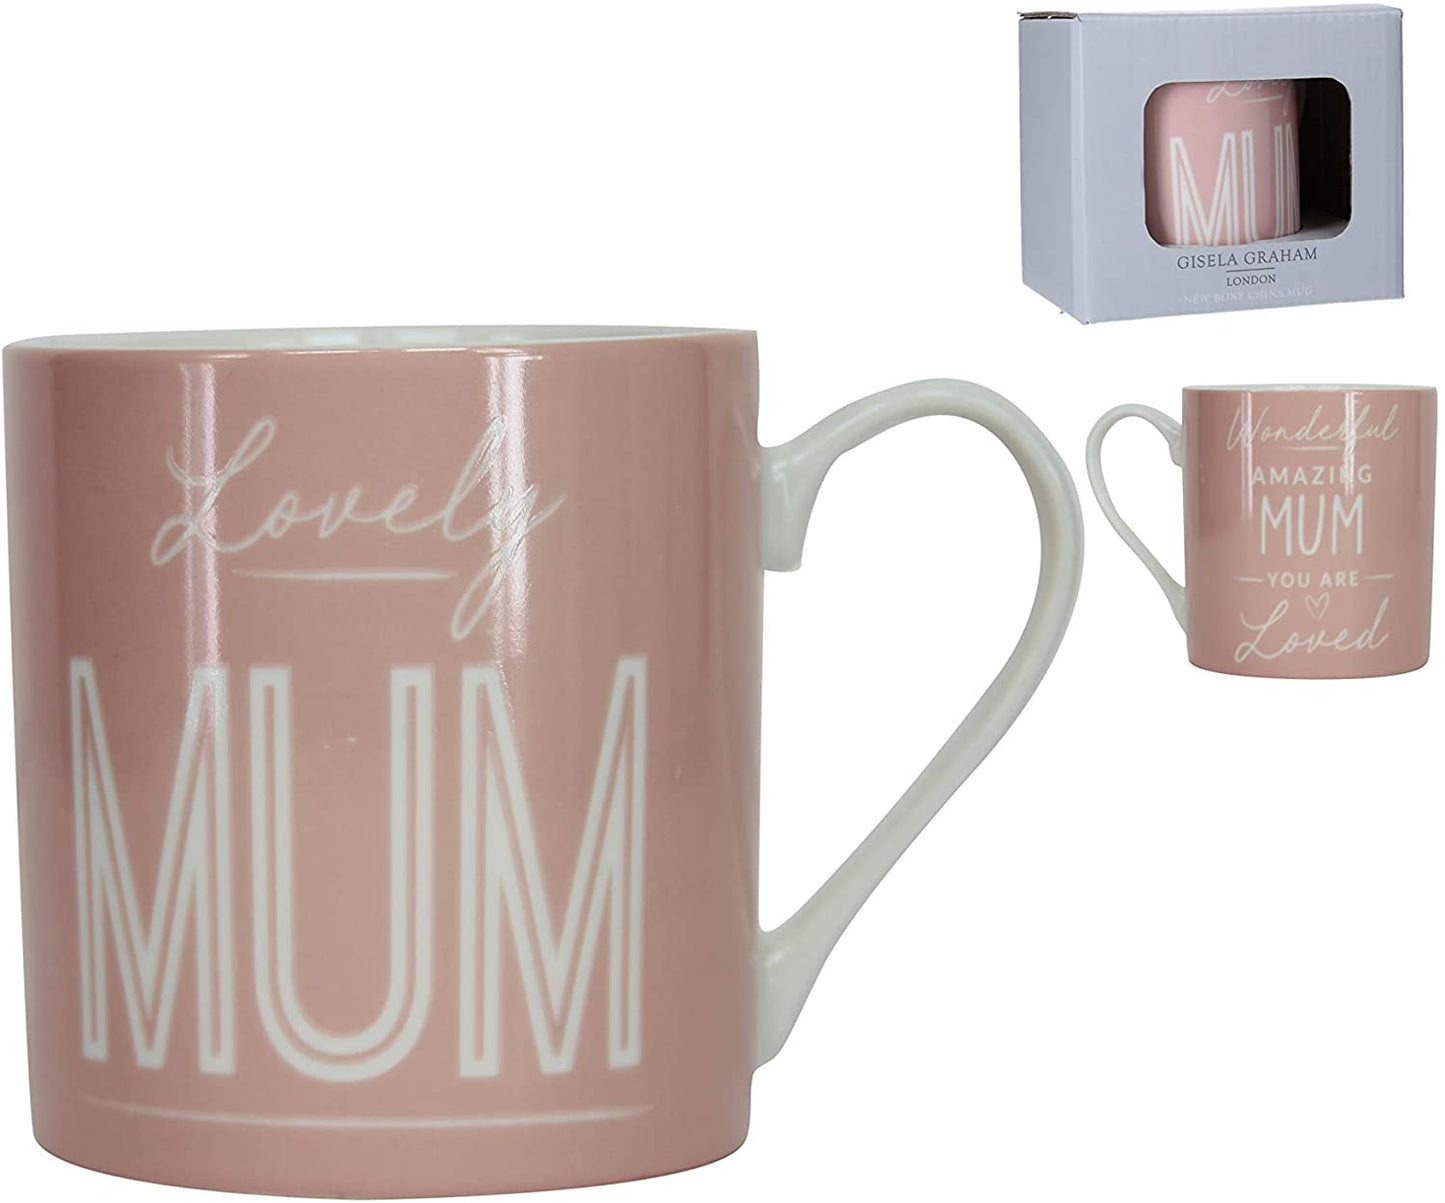 Pink ‘Mum’ Bone China Mug